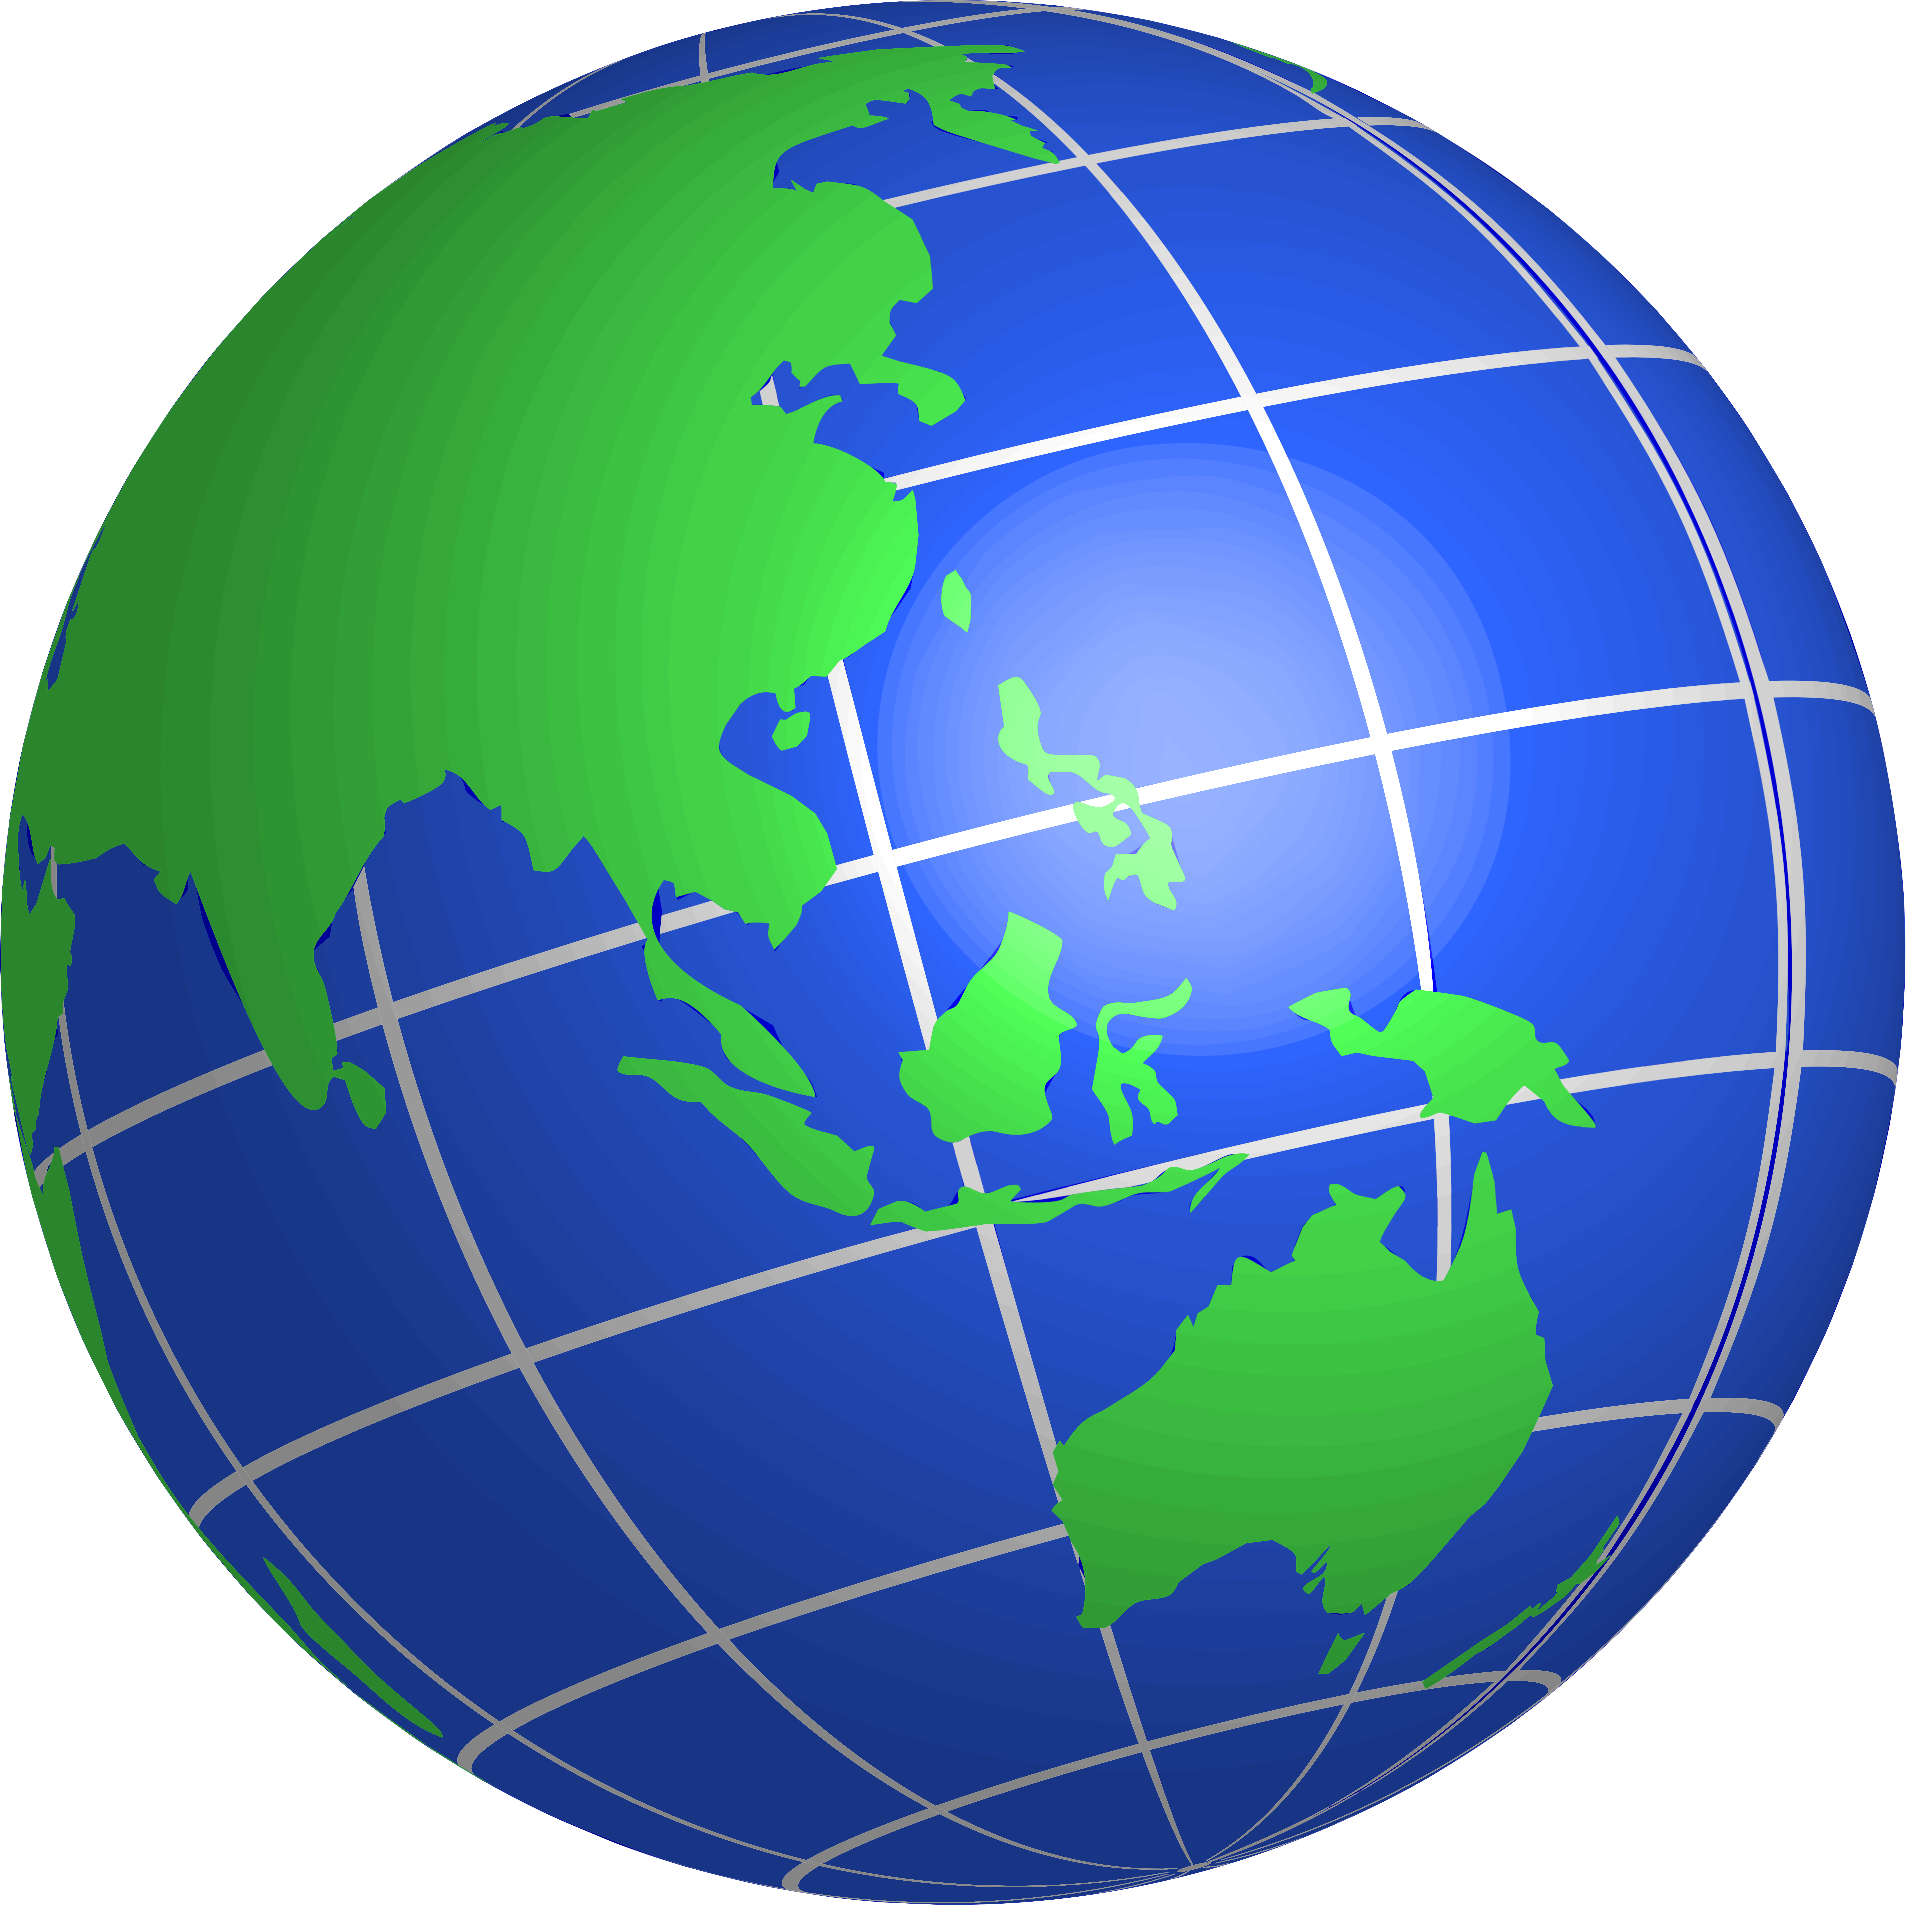 Oceania World Globe by bdtiger2000